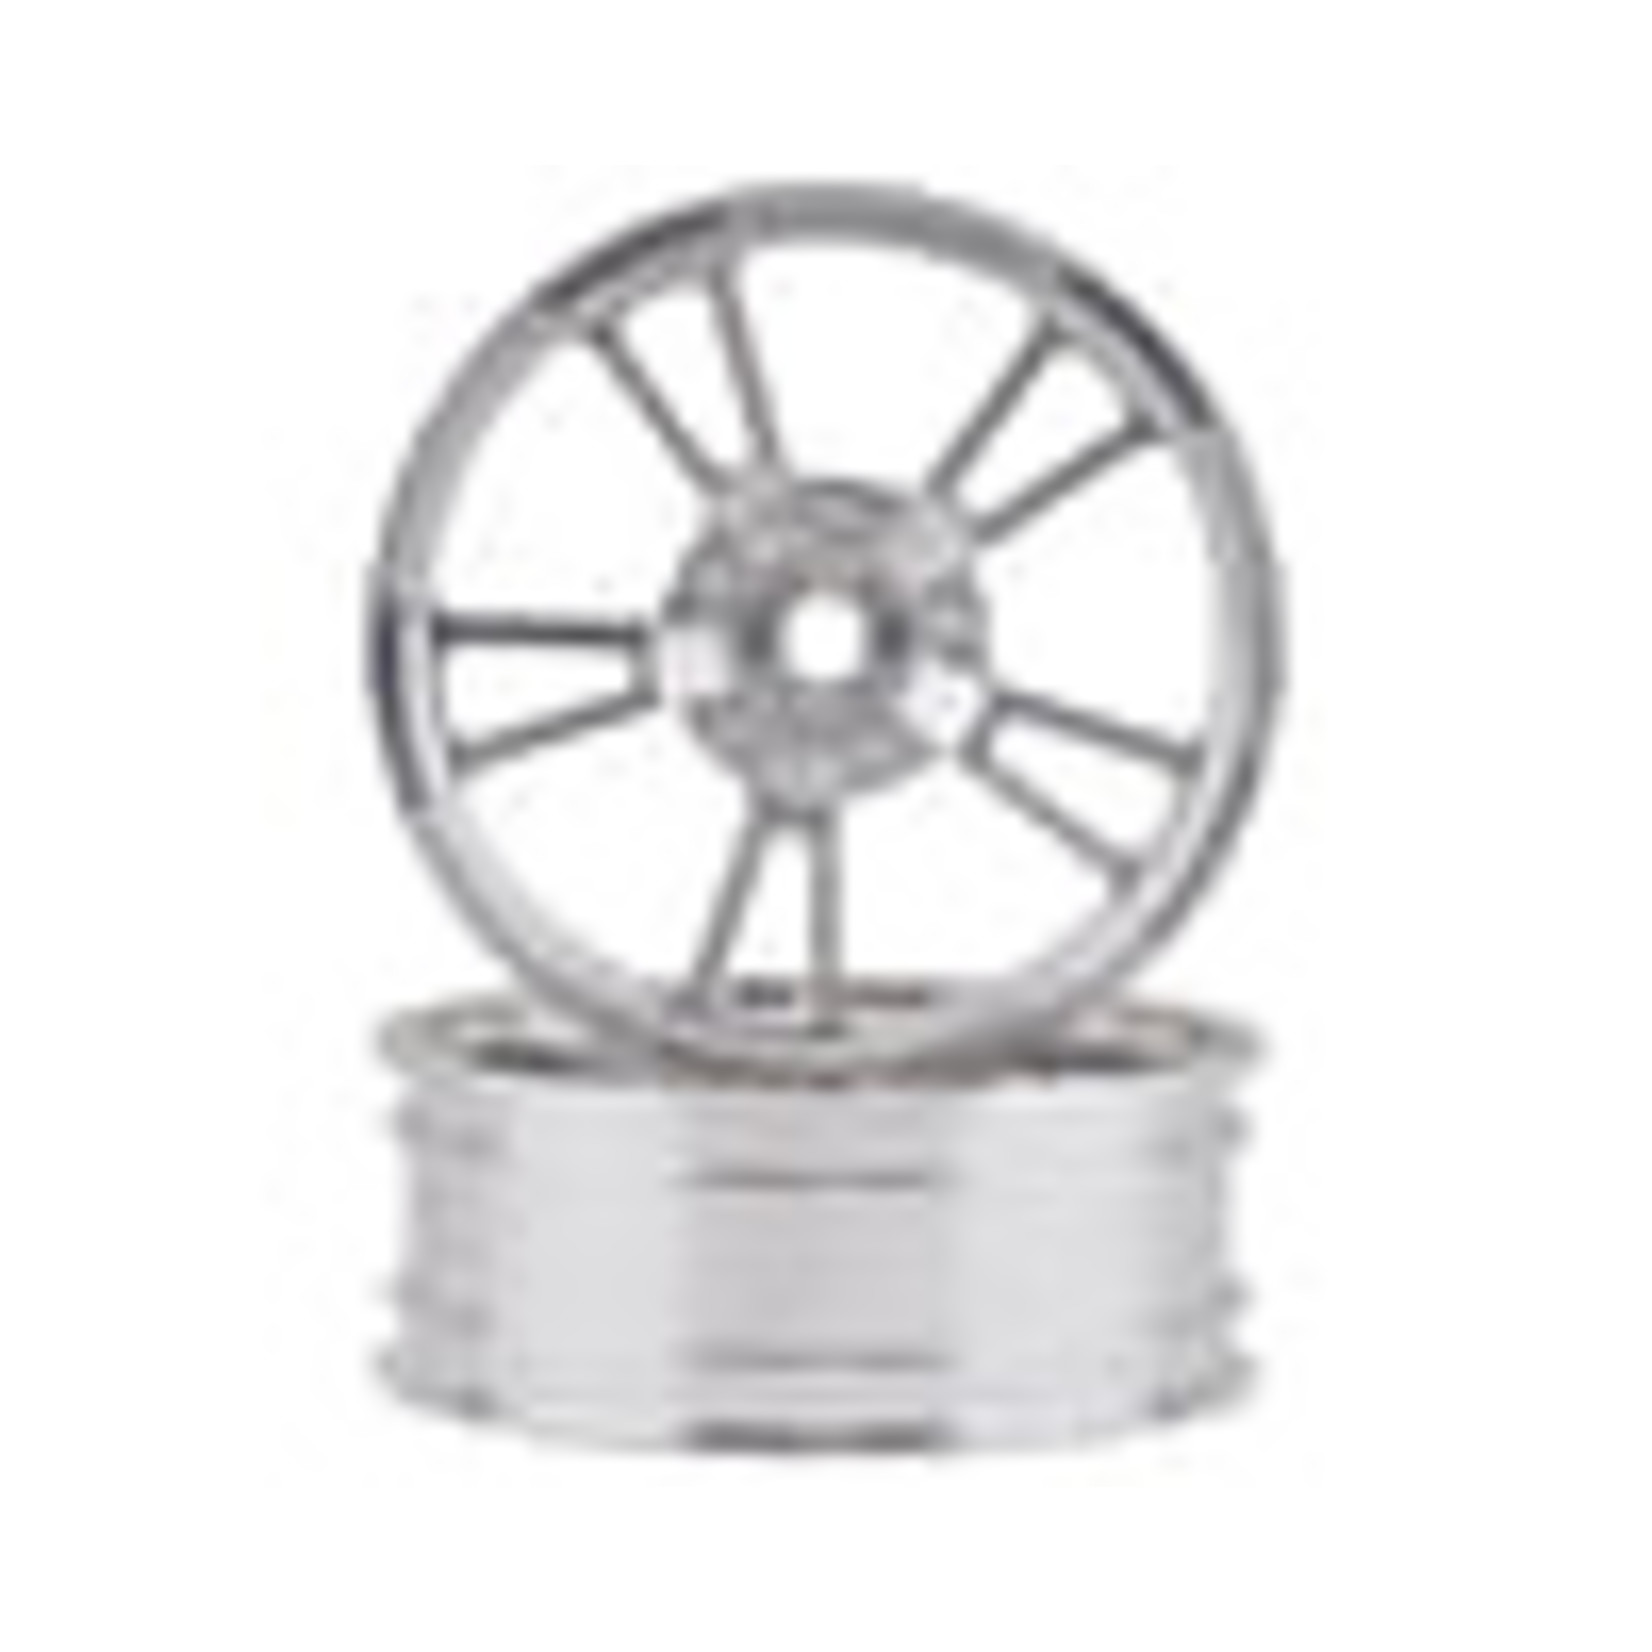 SSD RC V Spoke Aluminum Front 2.2” Drag Racing Wheels (Silver